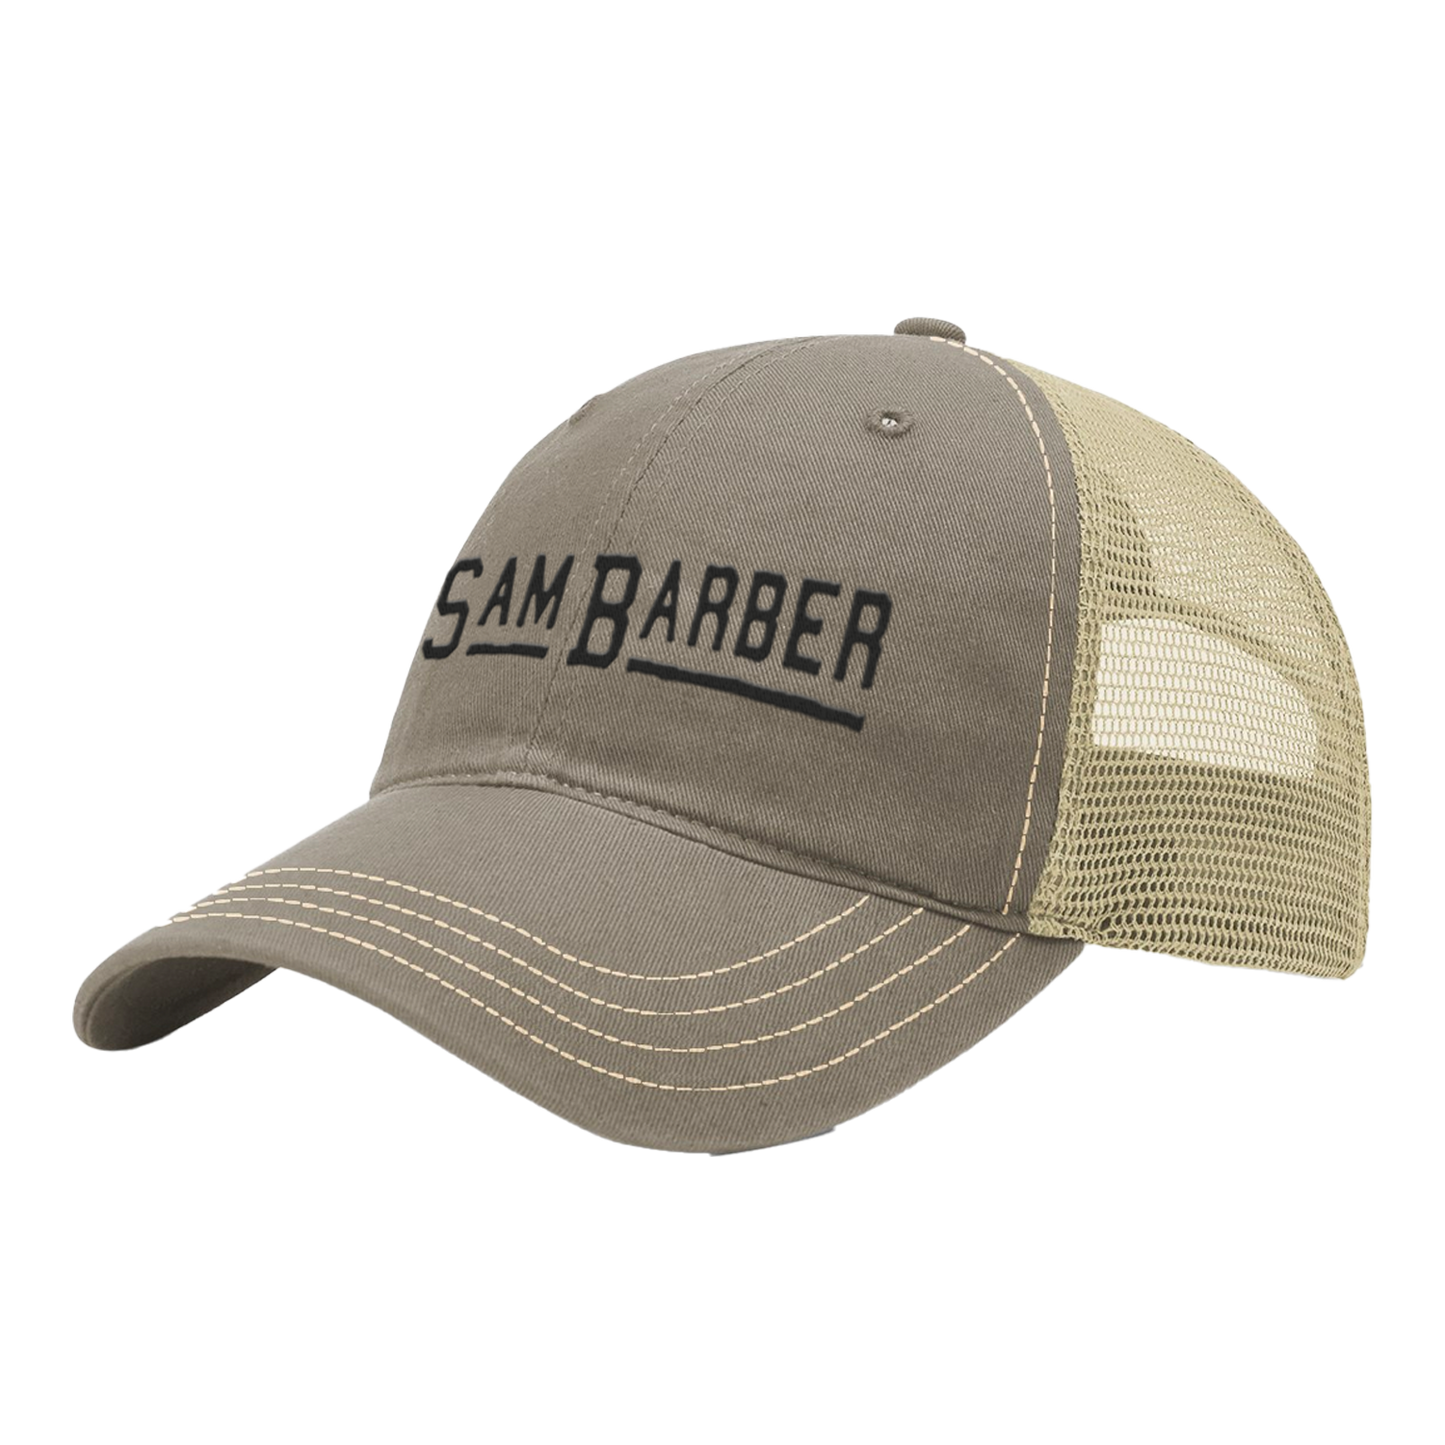 Sam Barber Embroidered Trucker Hat